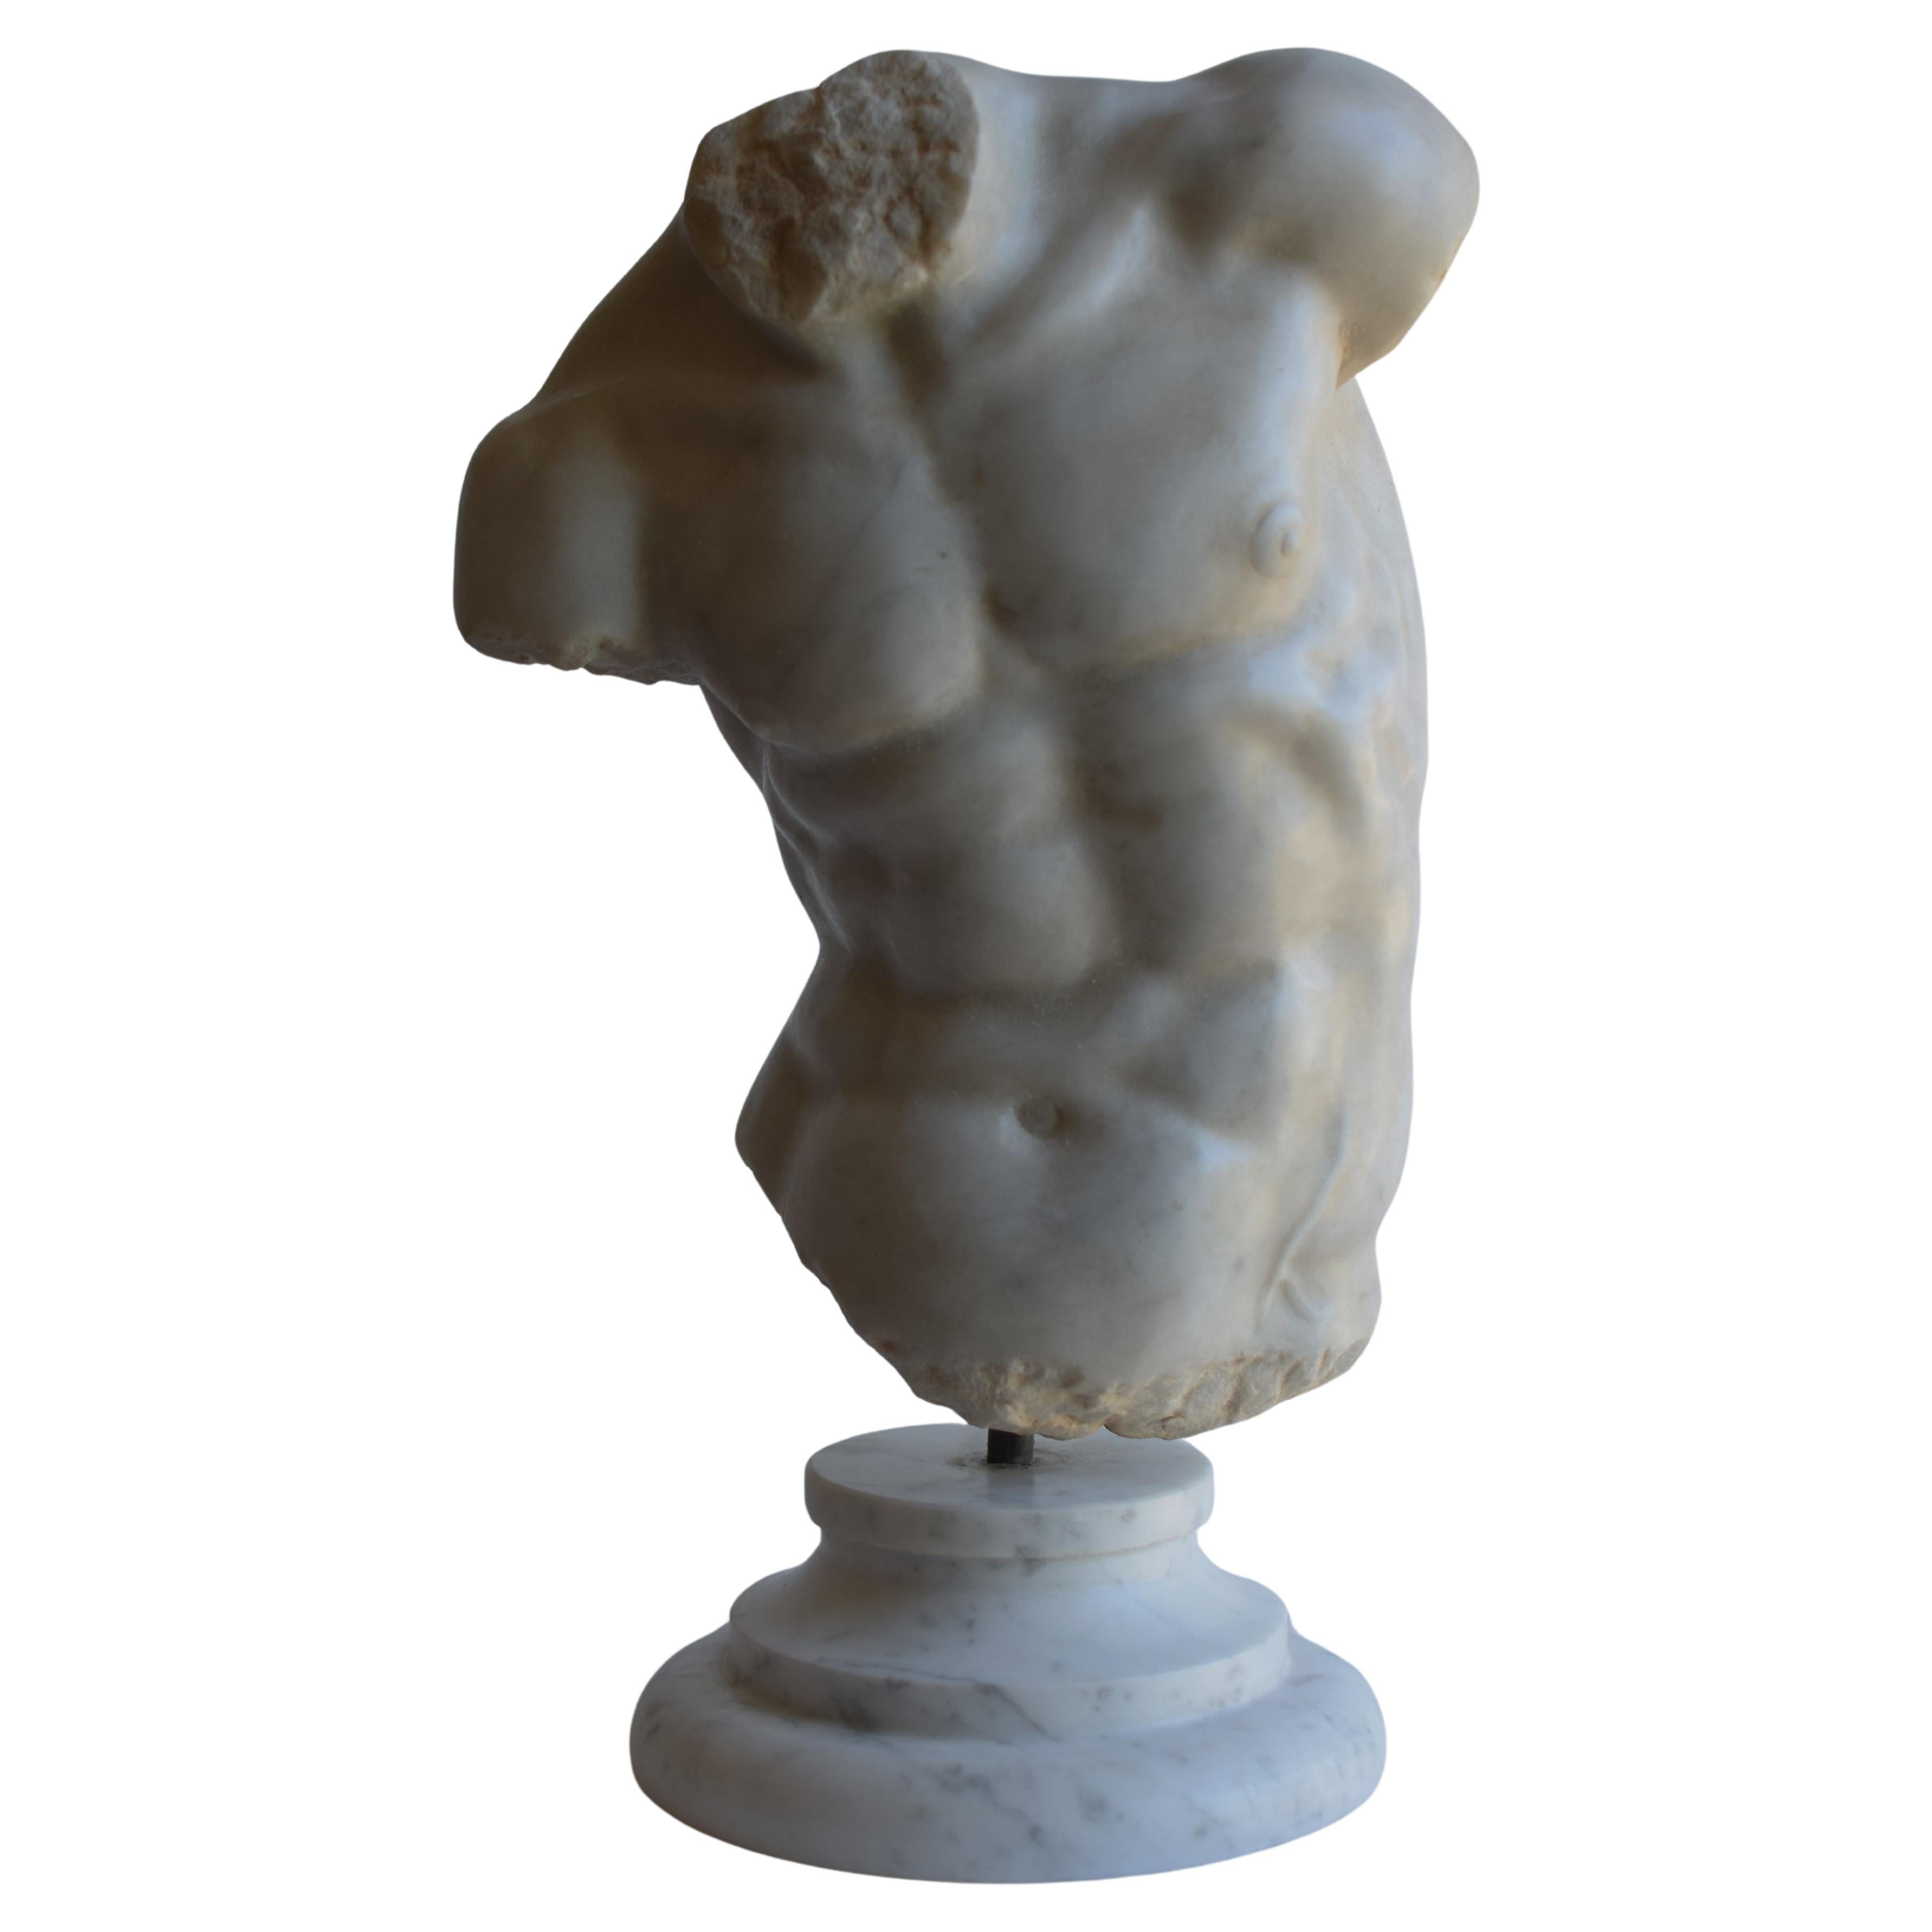 Torse masculin - "Torso Gaddi" sculpté sur marbre blanc de Carrare en vente